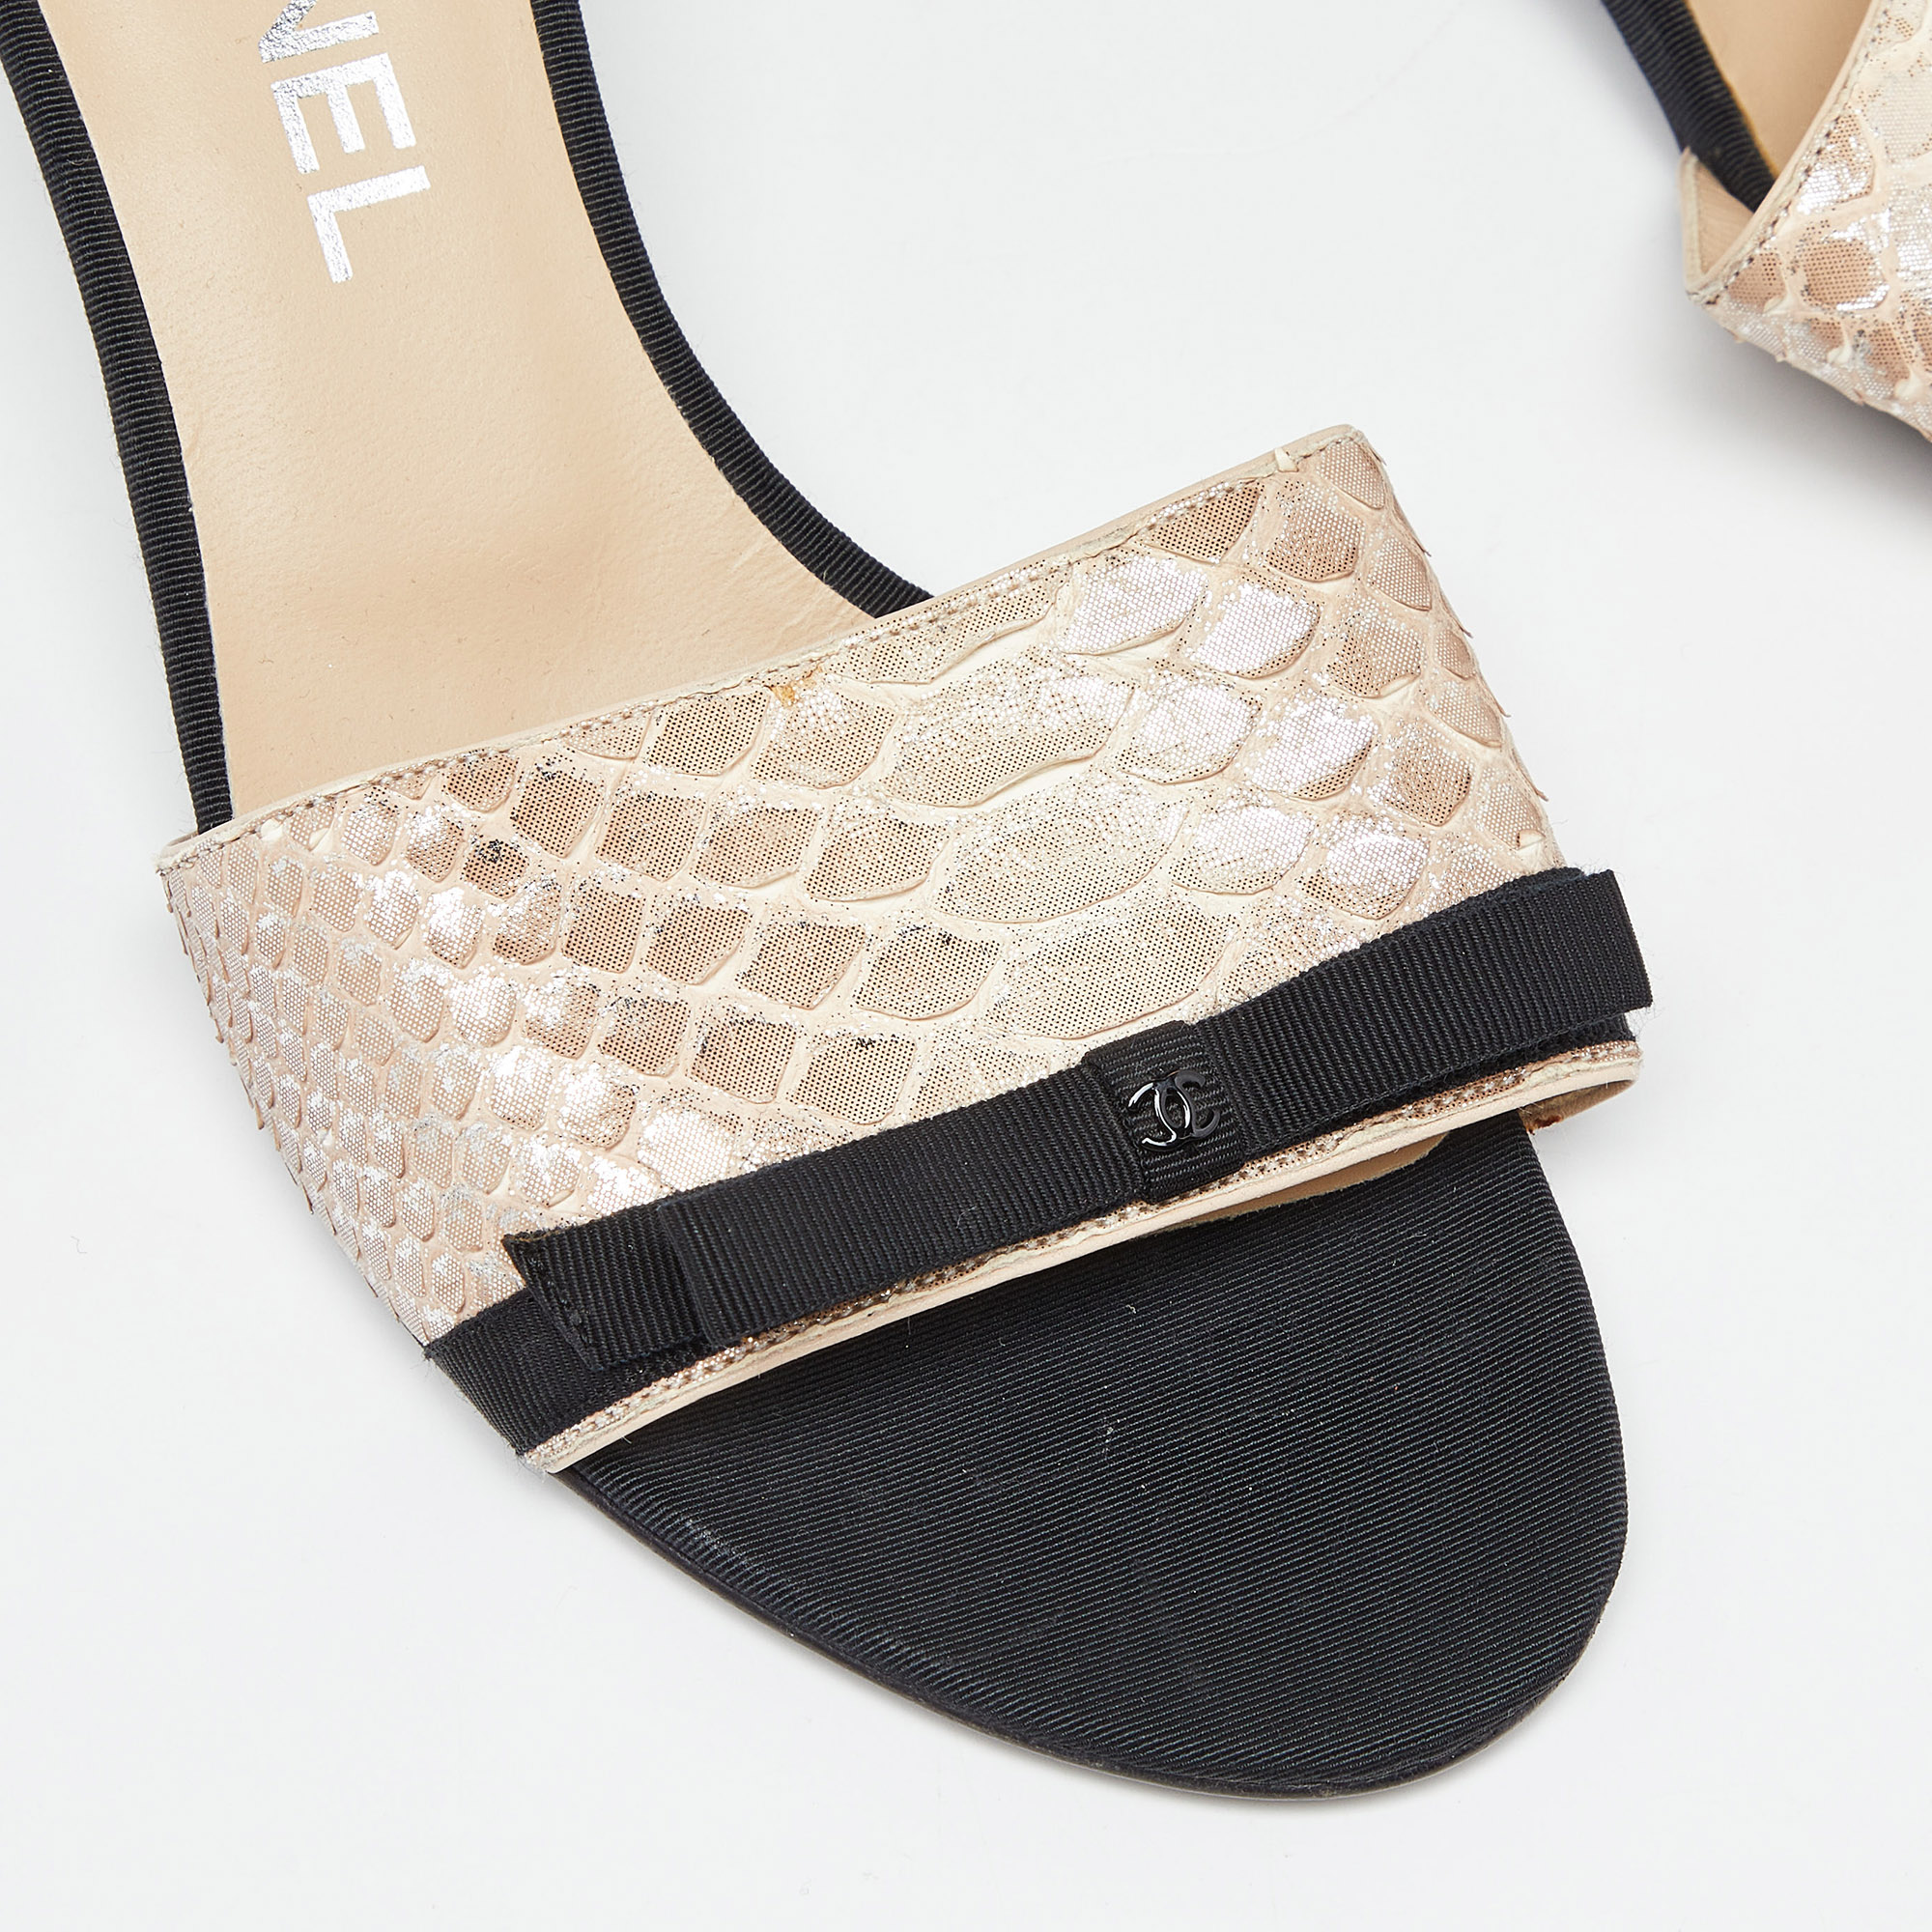 Chanel Metallic/Black Python And Fabric Bow CC Slide Sandals Size 38.5